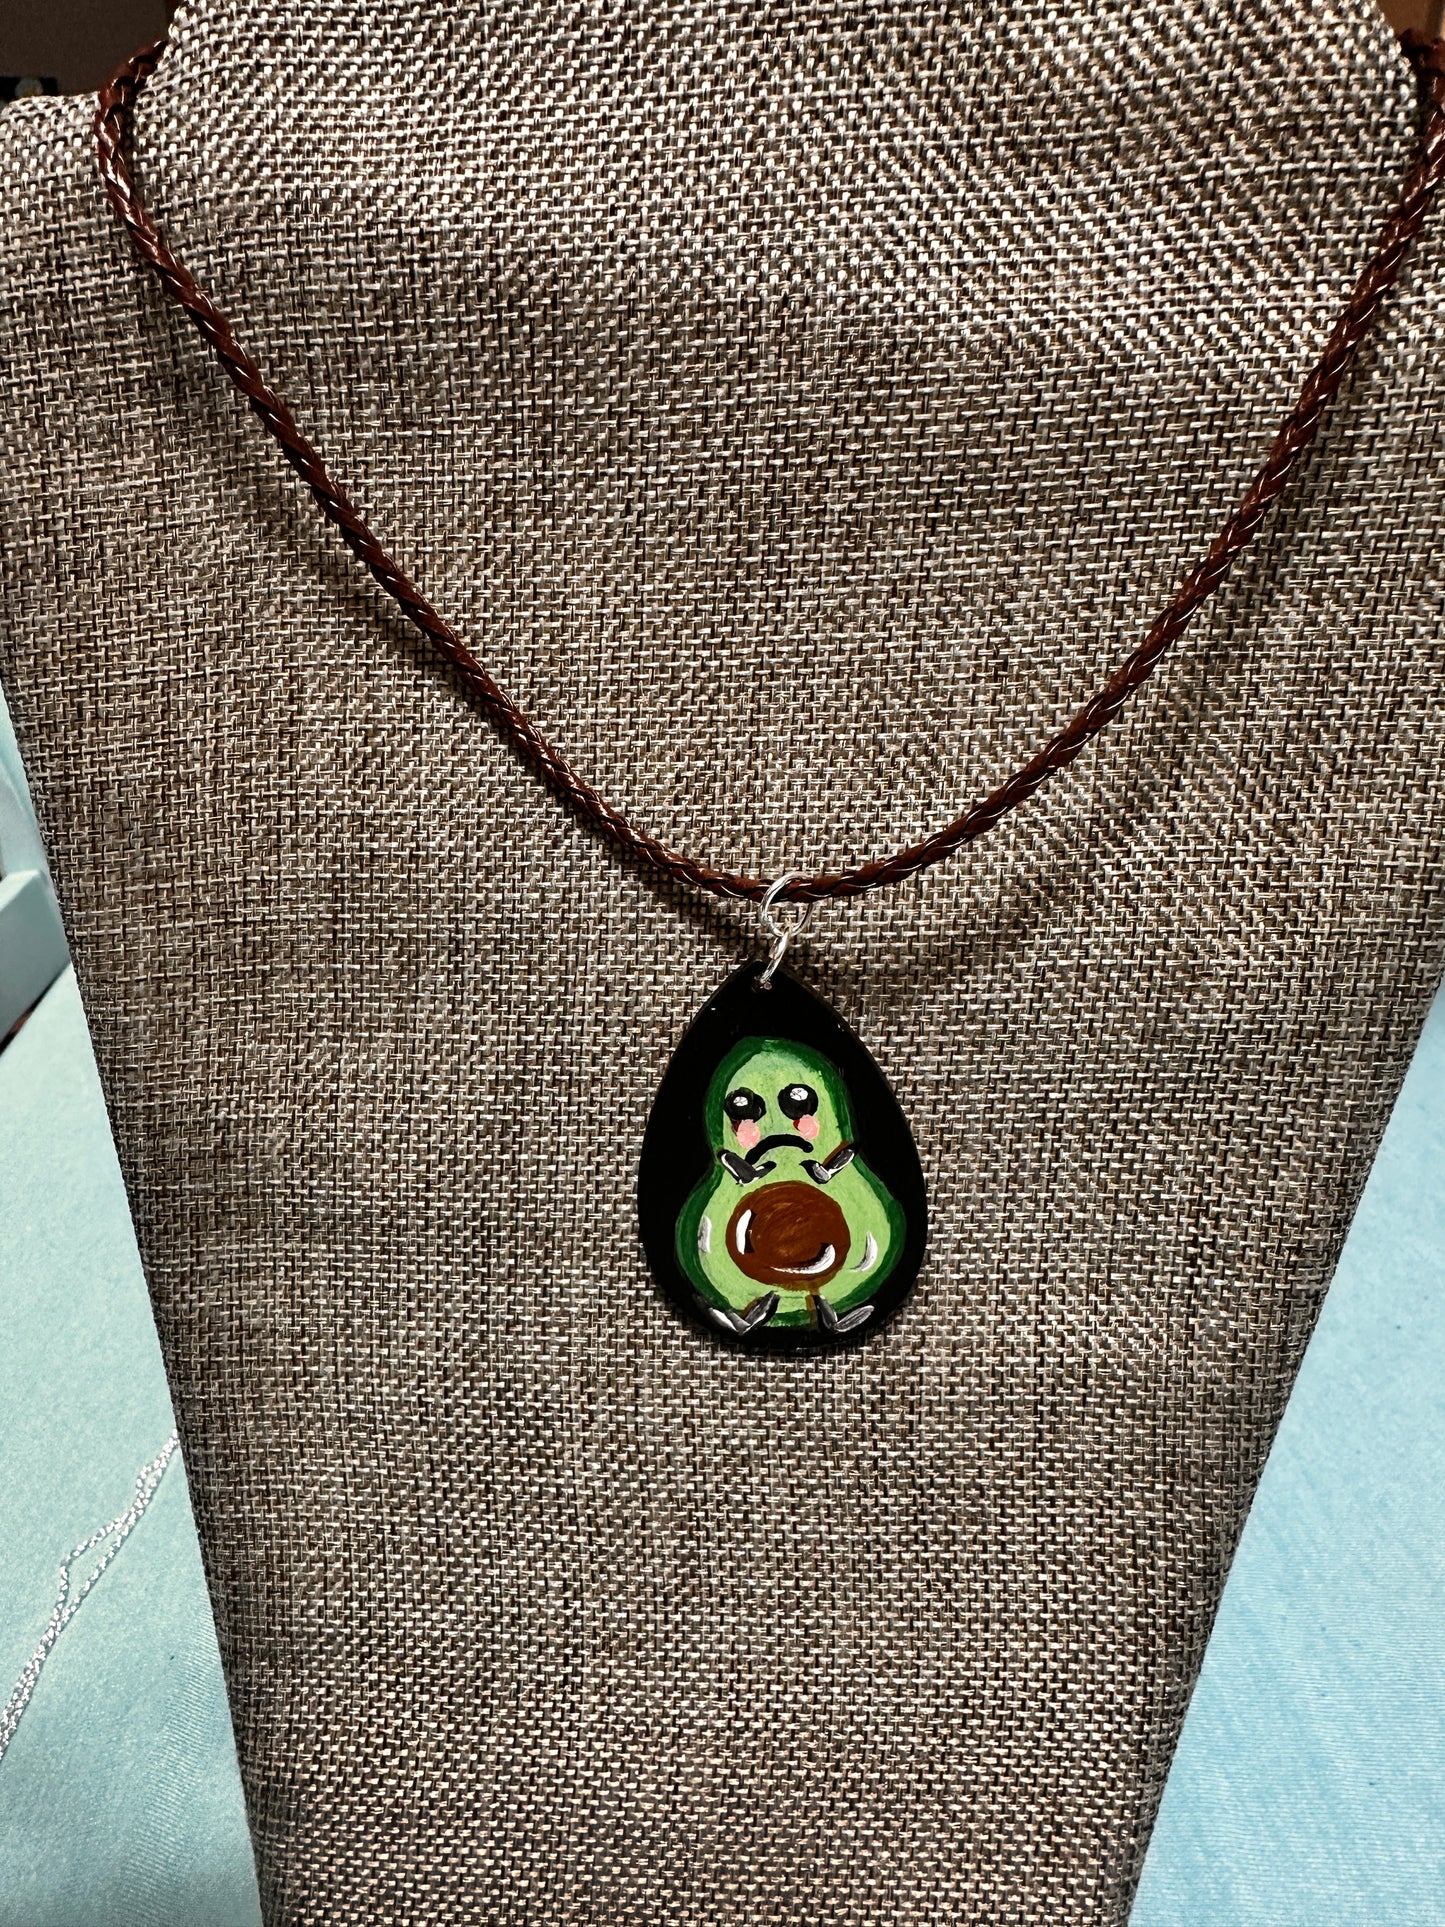 Avocado Happy Sad Hand Painted Handmade Necklace on Cord